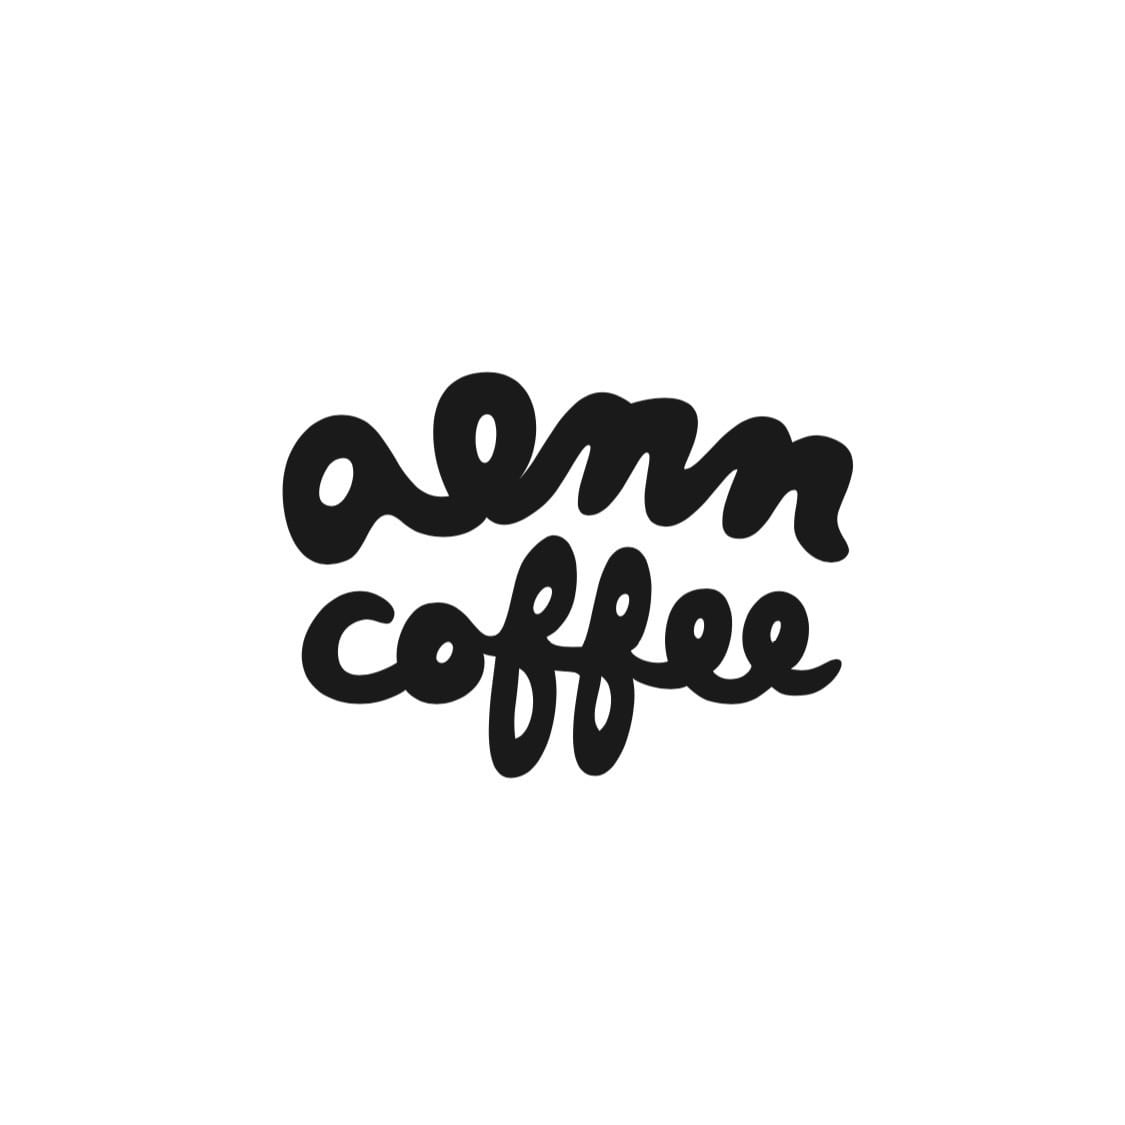 aenn coffee(あえんこーひー）